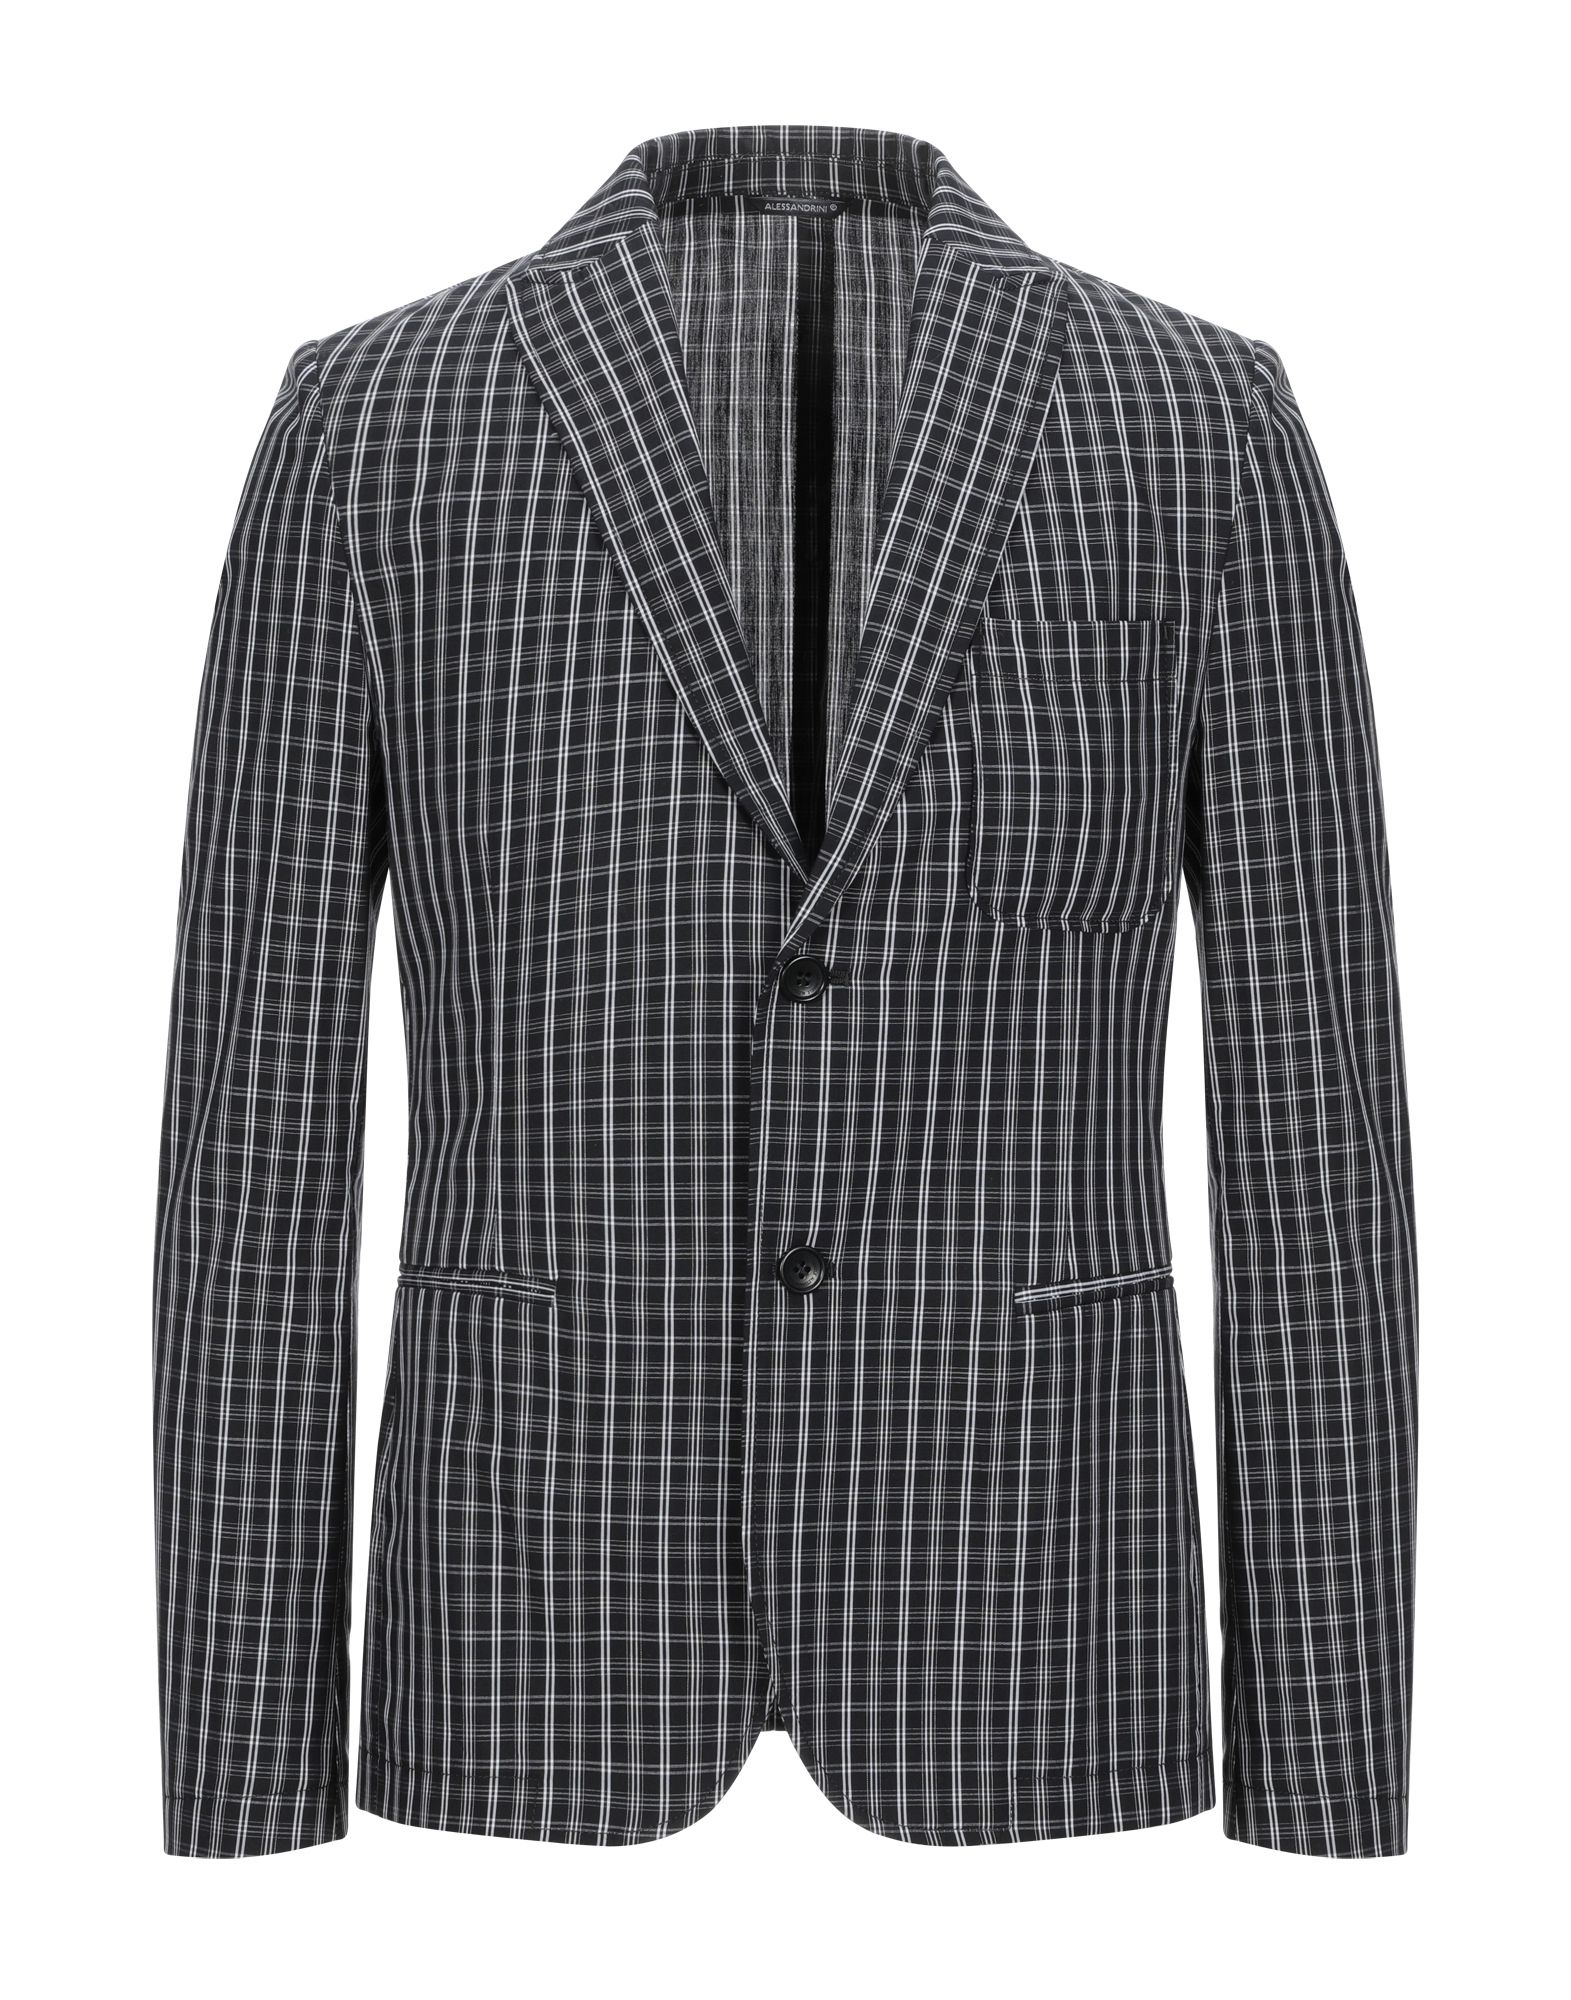 DANIELE ALESSANDRINI HOMME Suit jackets - Item 49524094